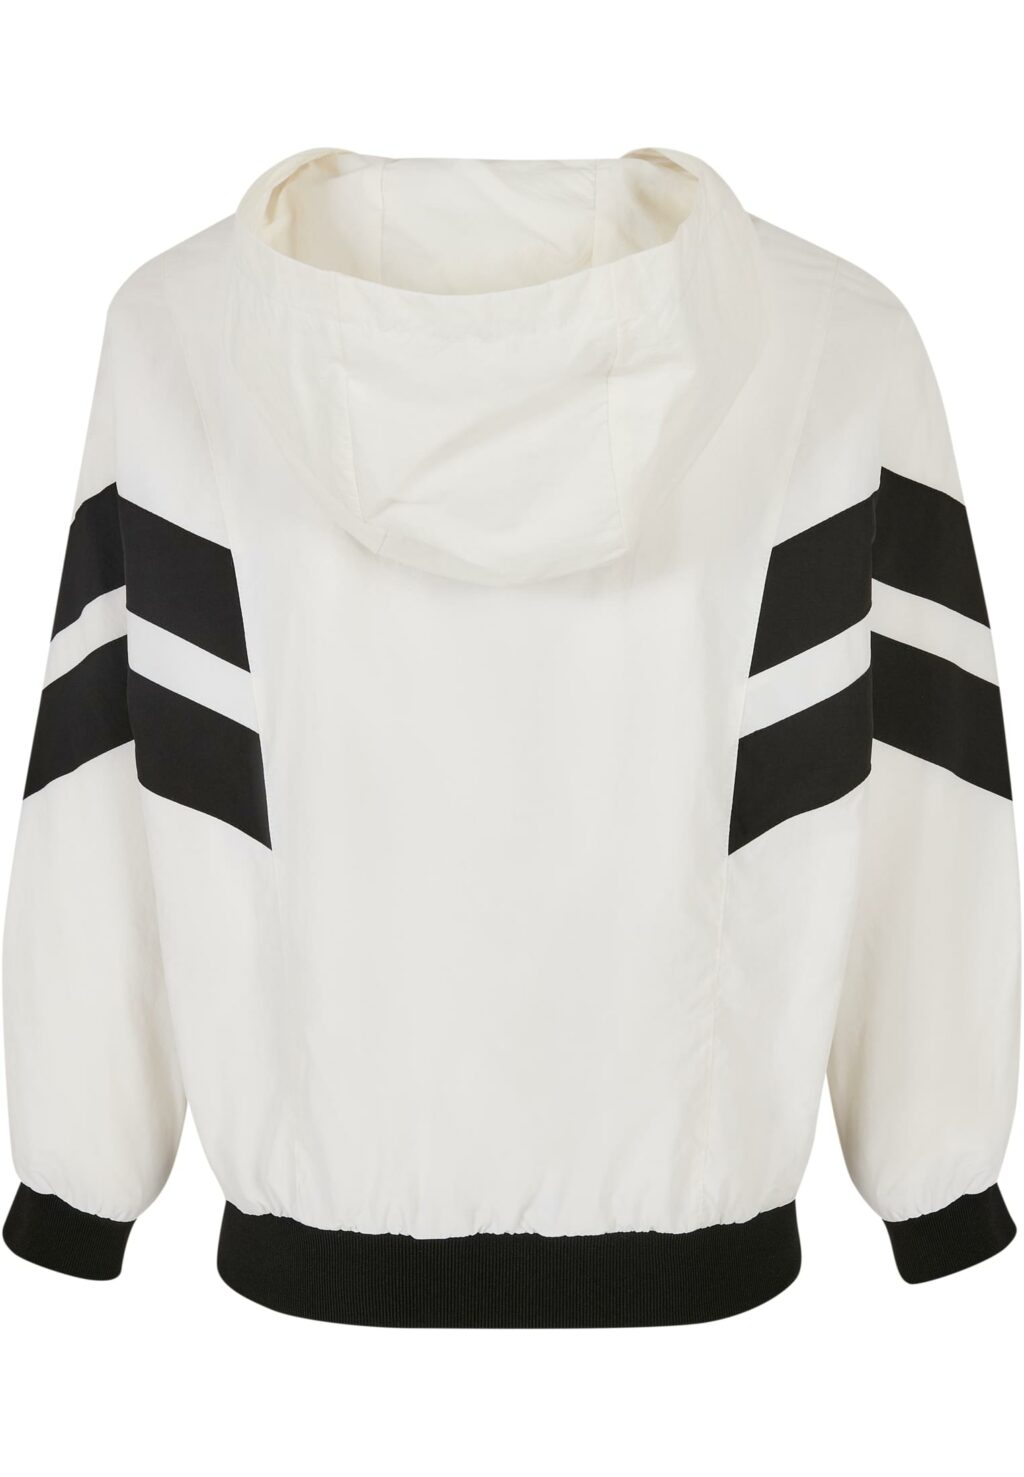 Girls Crinkle Batwing Jacket white/black UCK2664